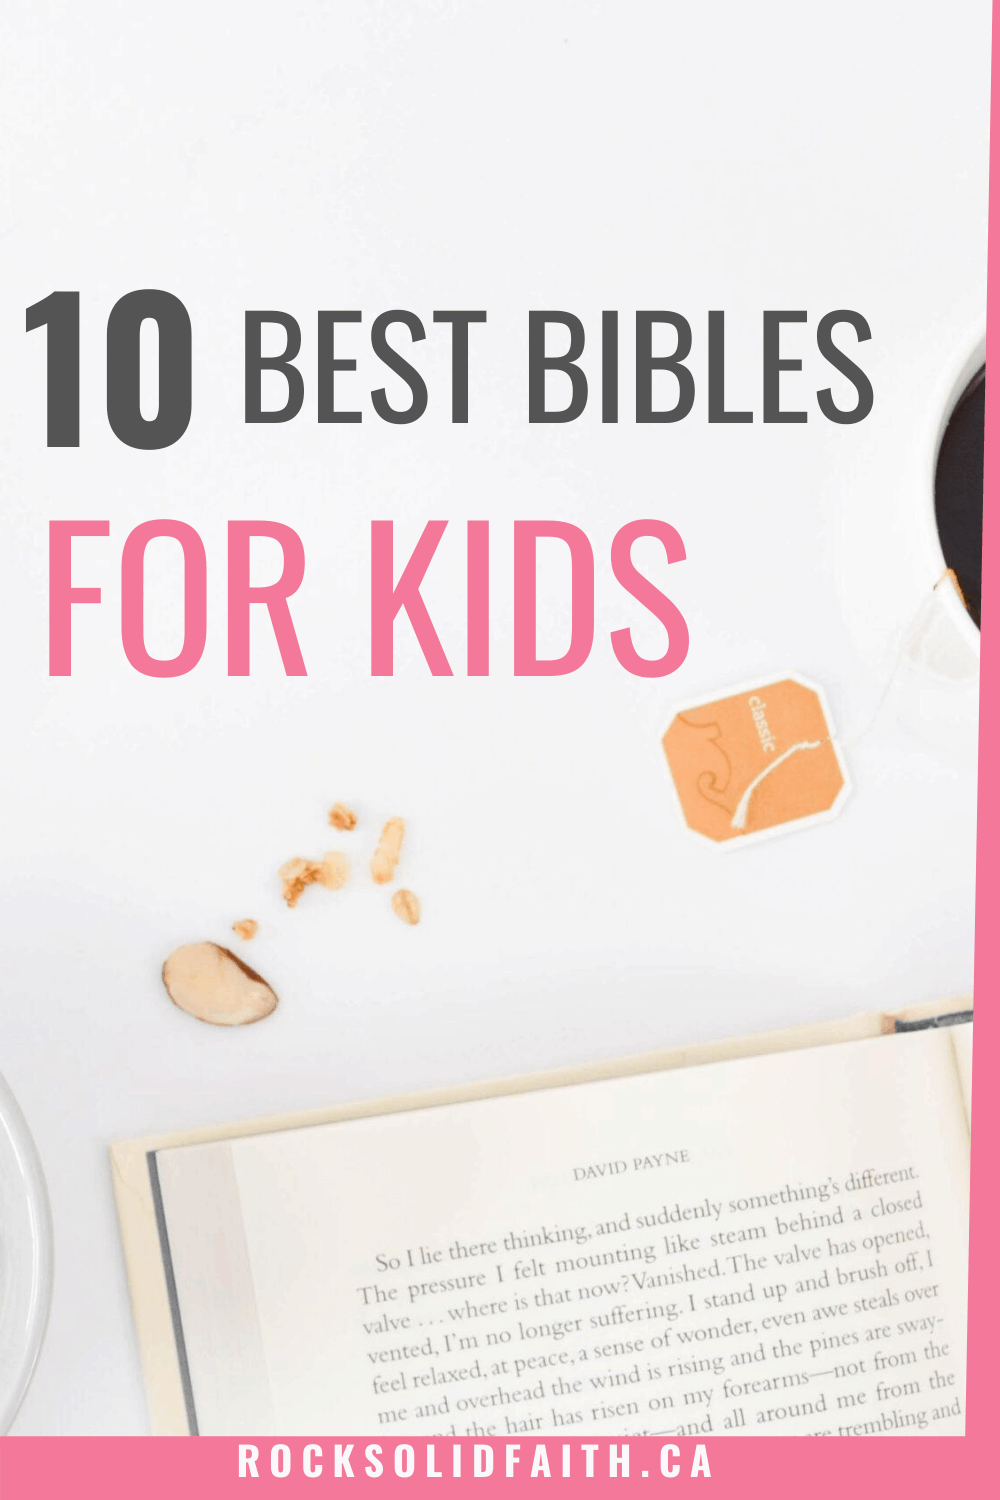 Best bibles for kids